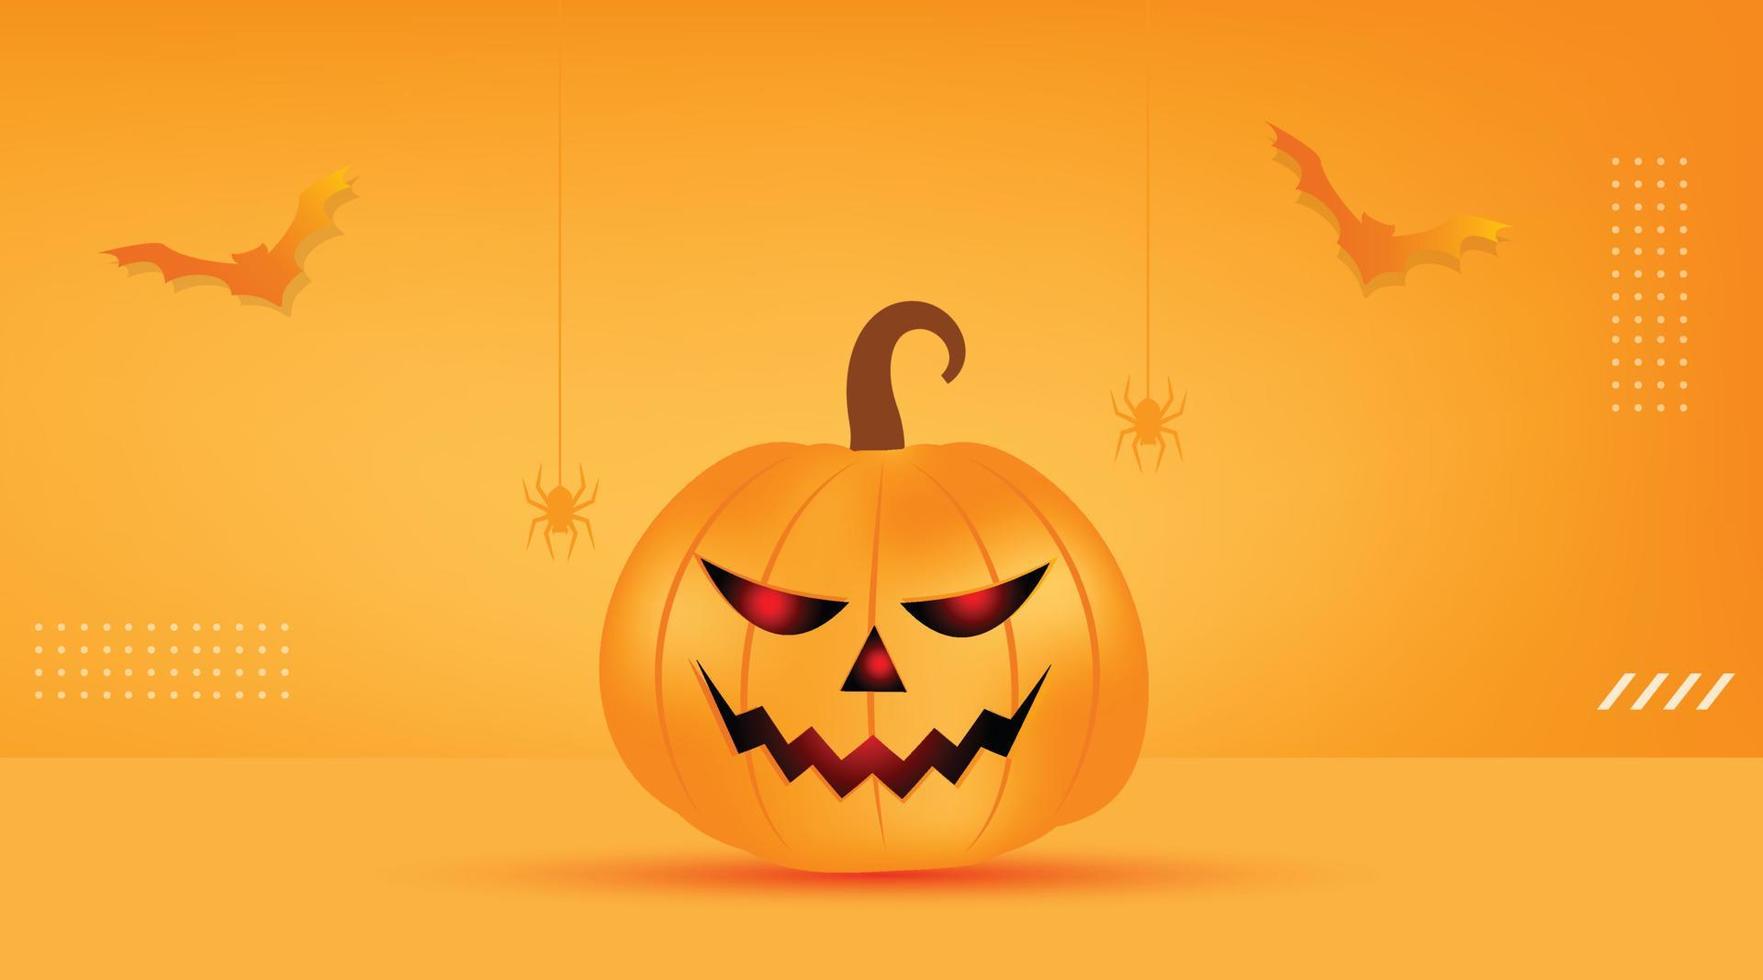 3D Halloween Background with Jack O Lantern pumpkin free vector illustration